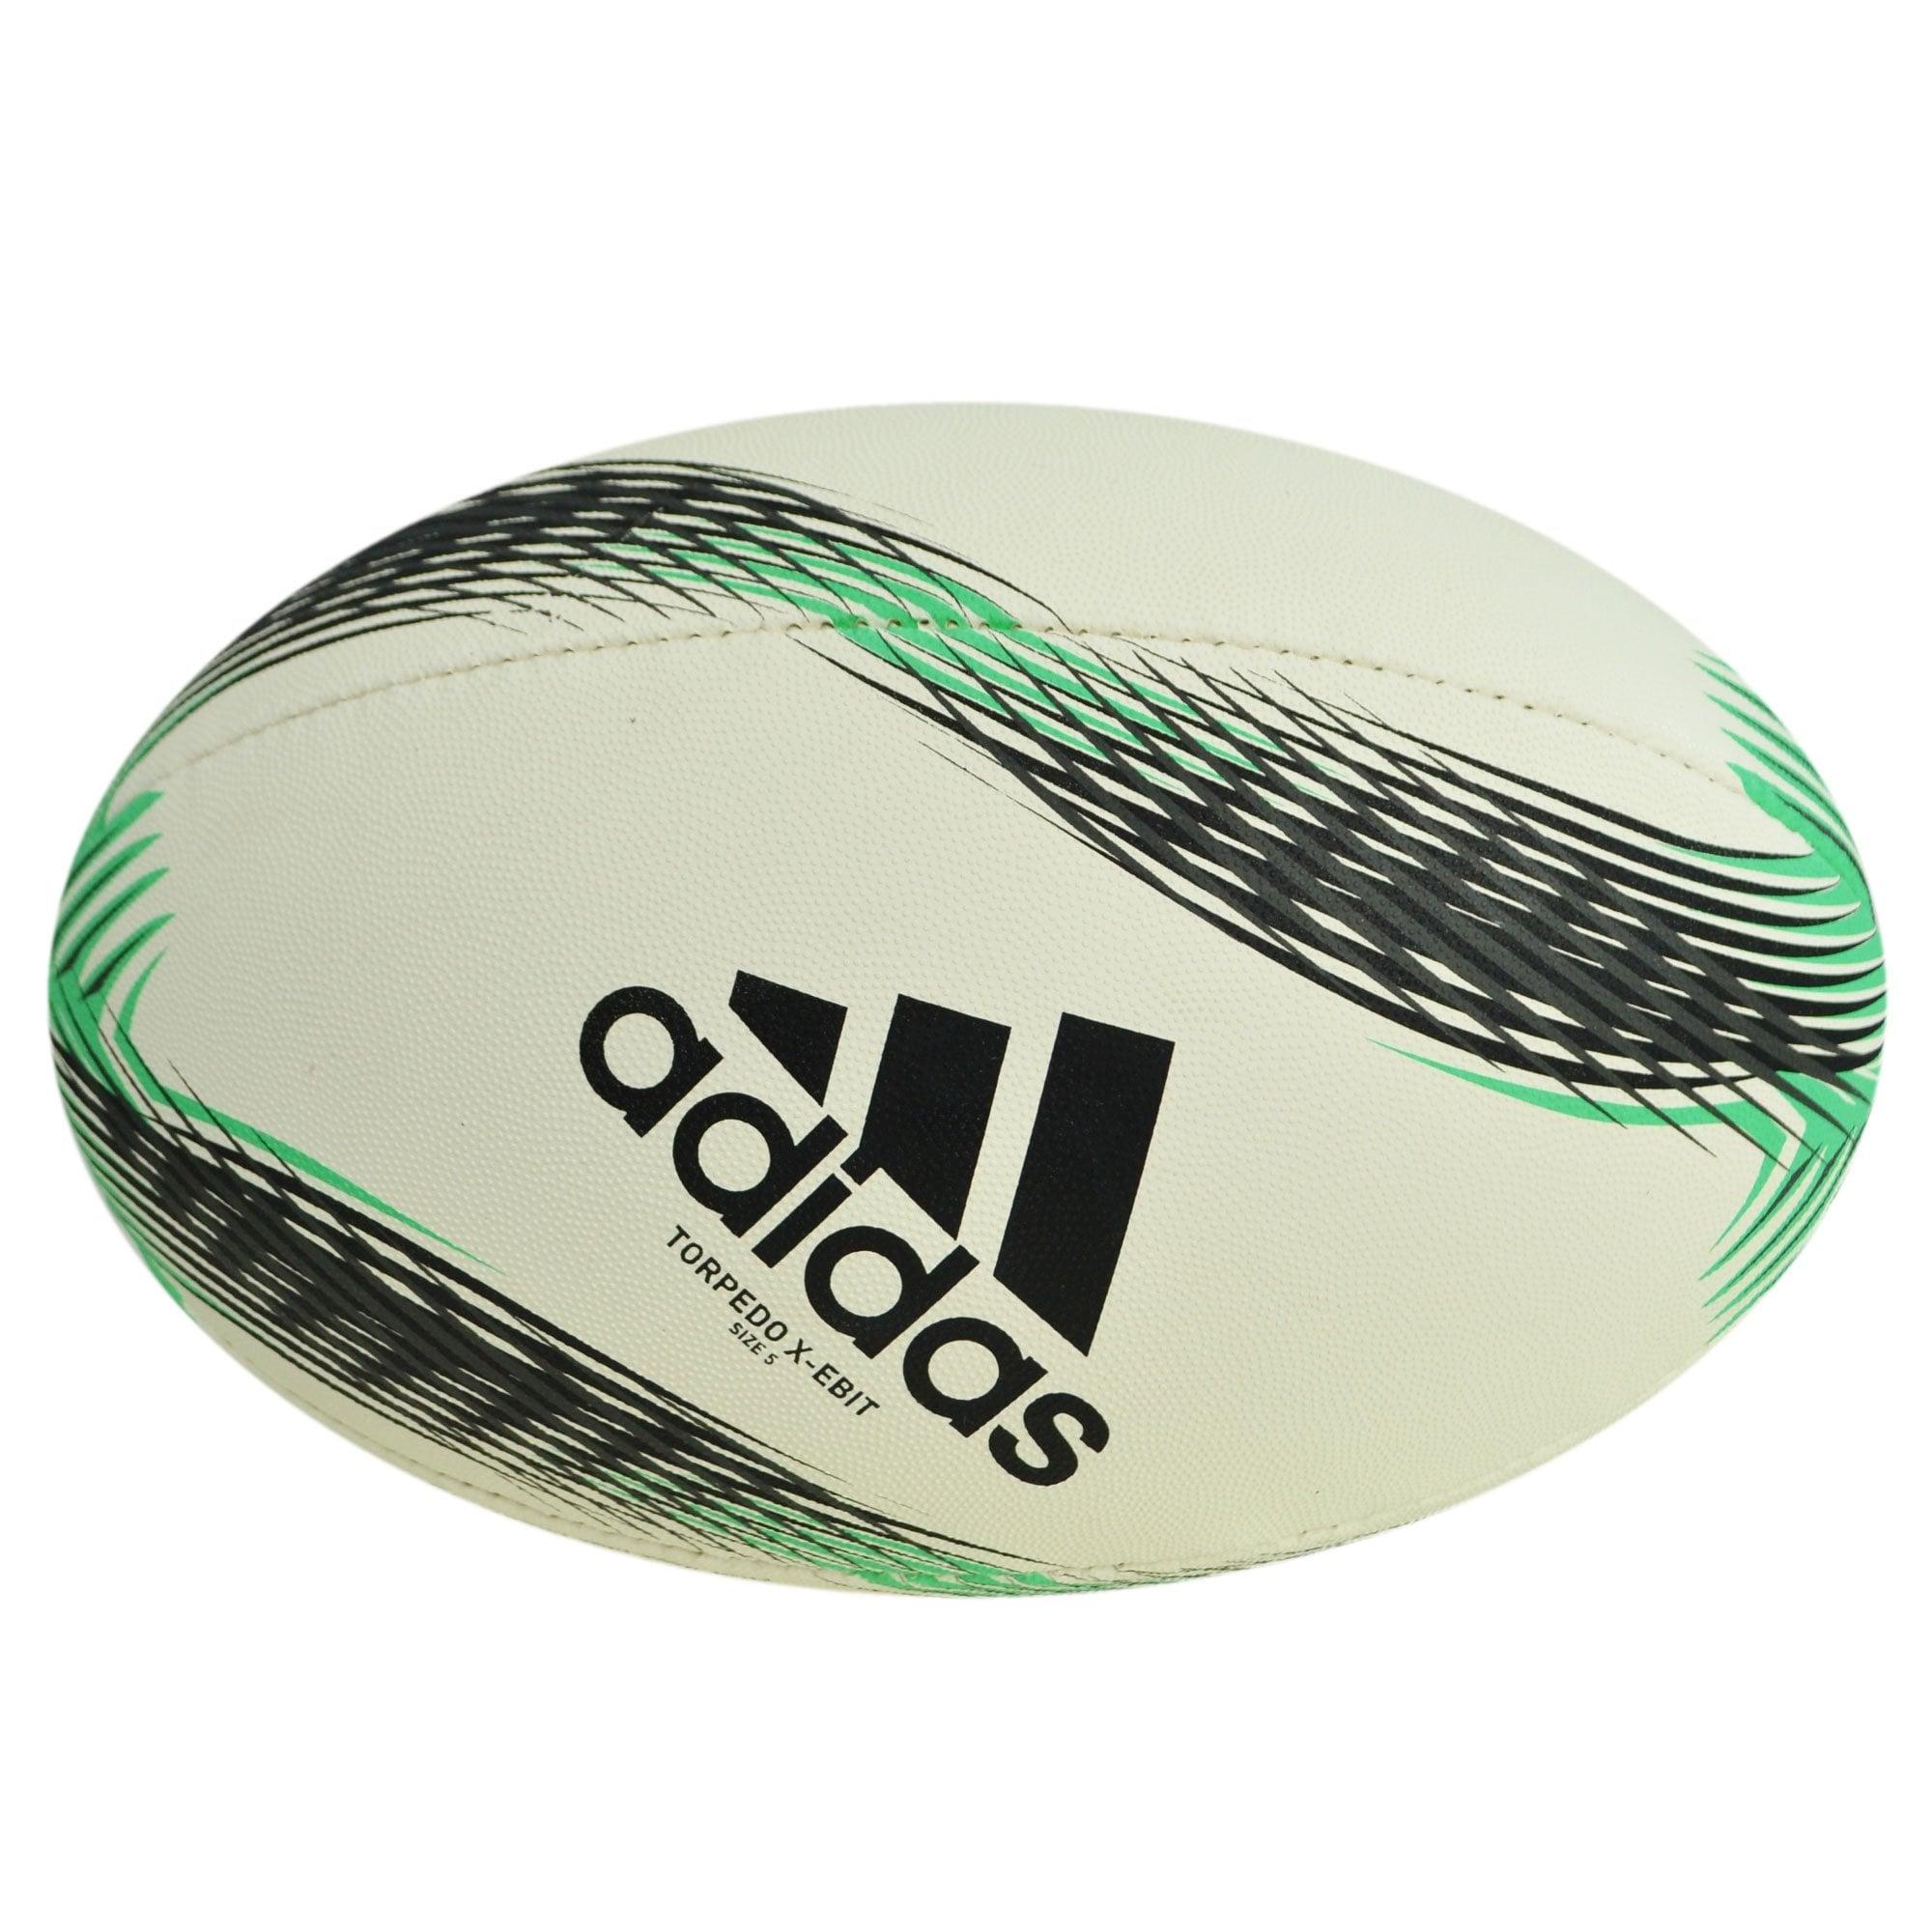 White X Green Ball Logo - Torpedo X Ebit Rugby Ball, Black And Green